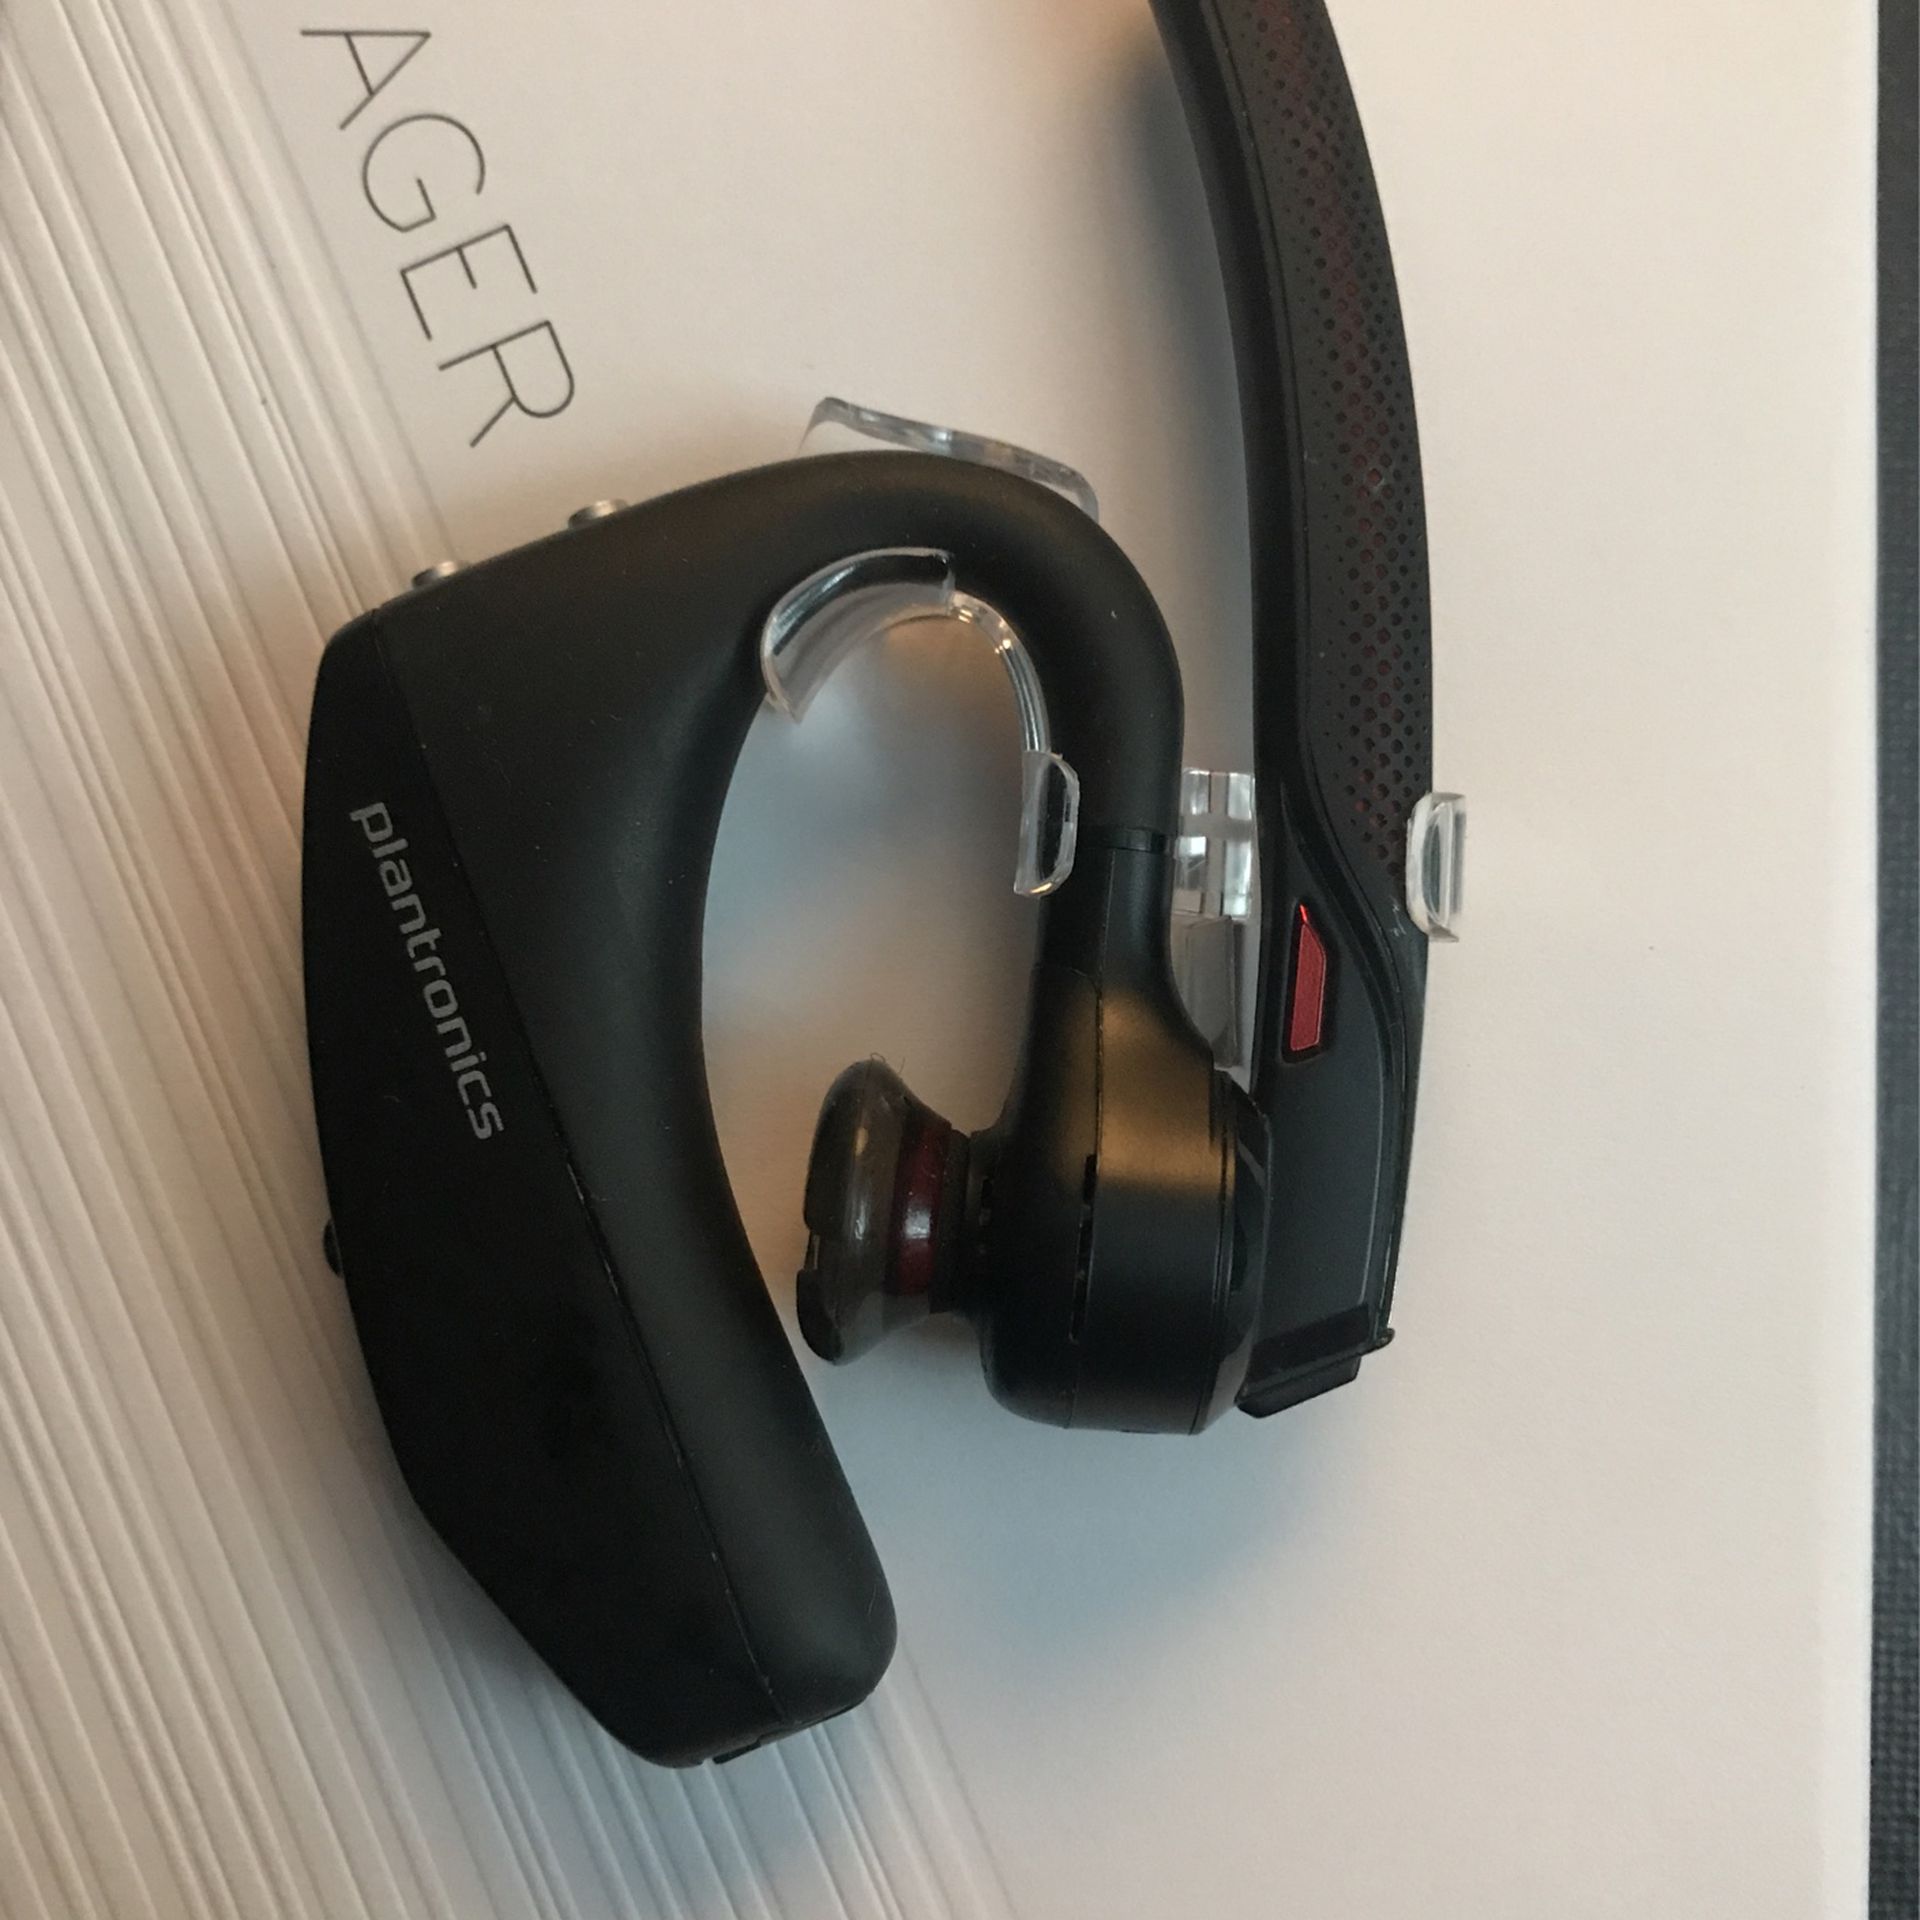 Plantronics - Voyager 5220 Bluetooth Headset with Amazon Alexa - Black